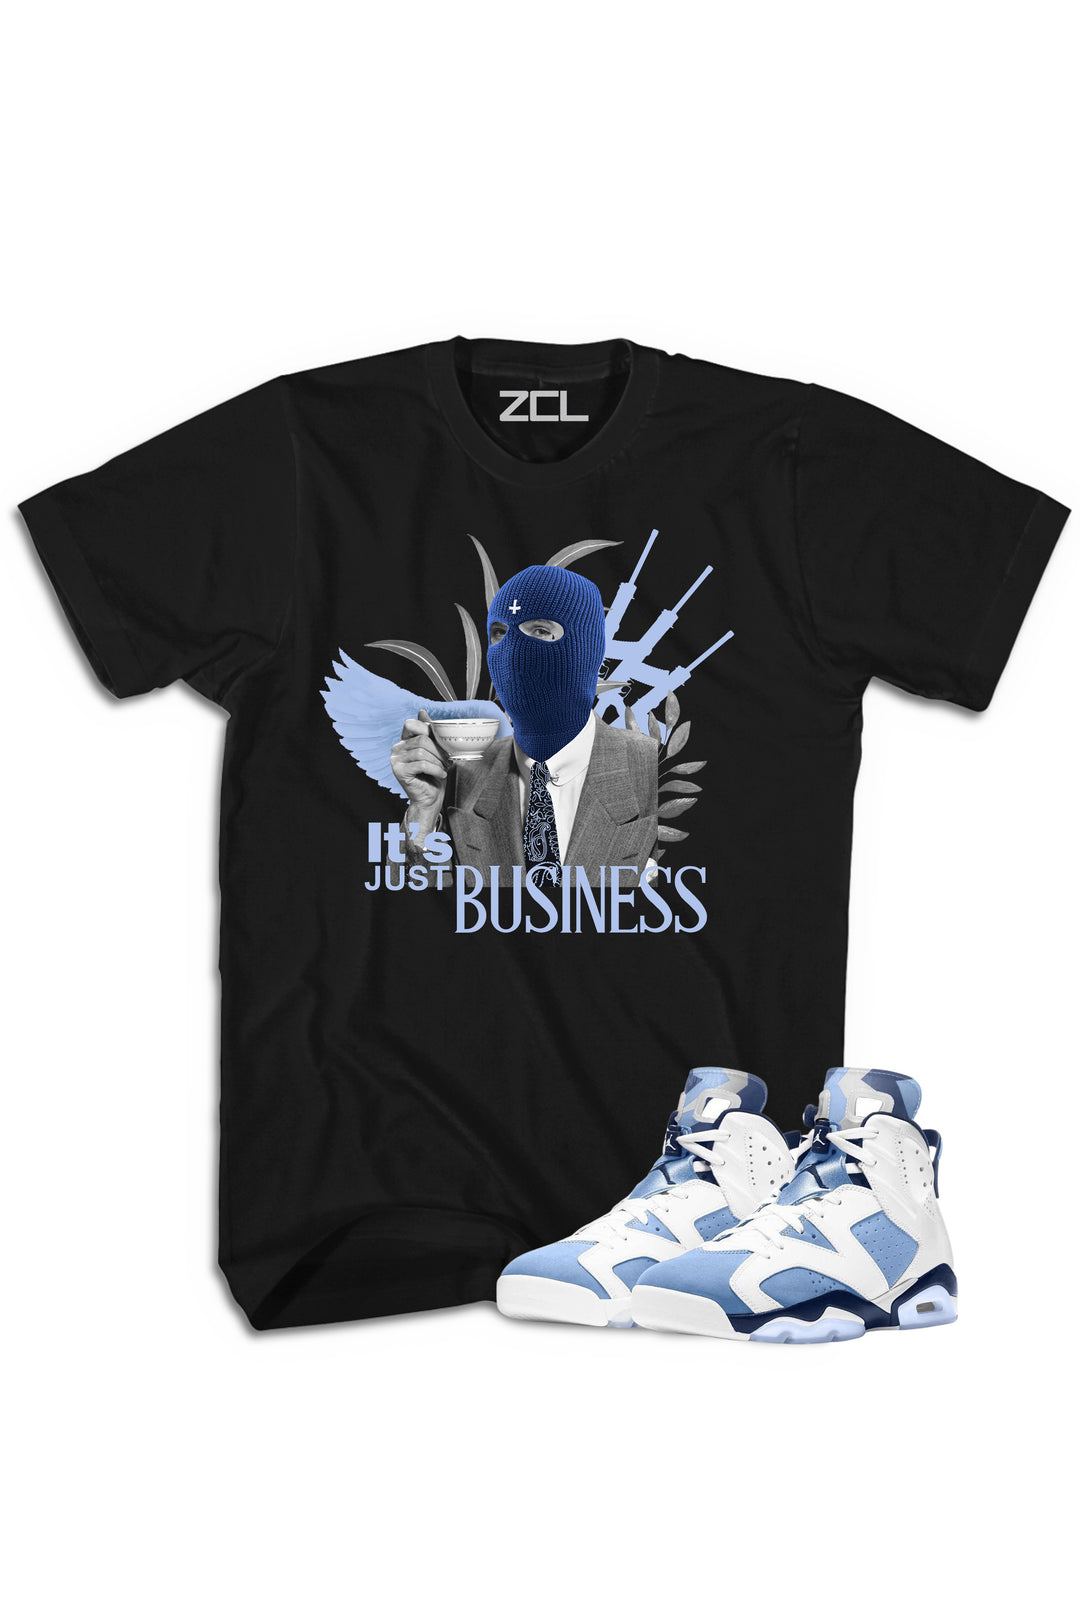 Air Jordan 6 "It's Just Business" Tee UNC White - Zamage